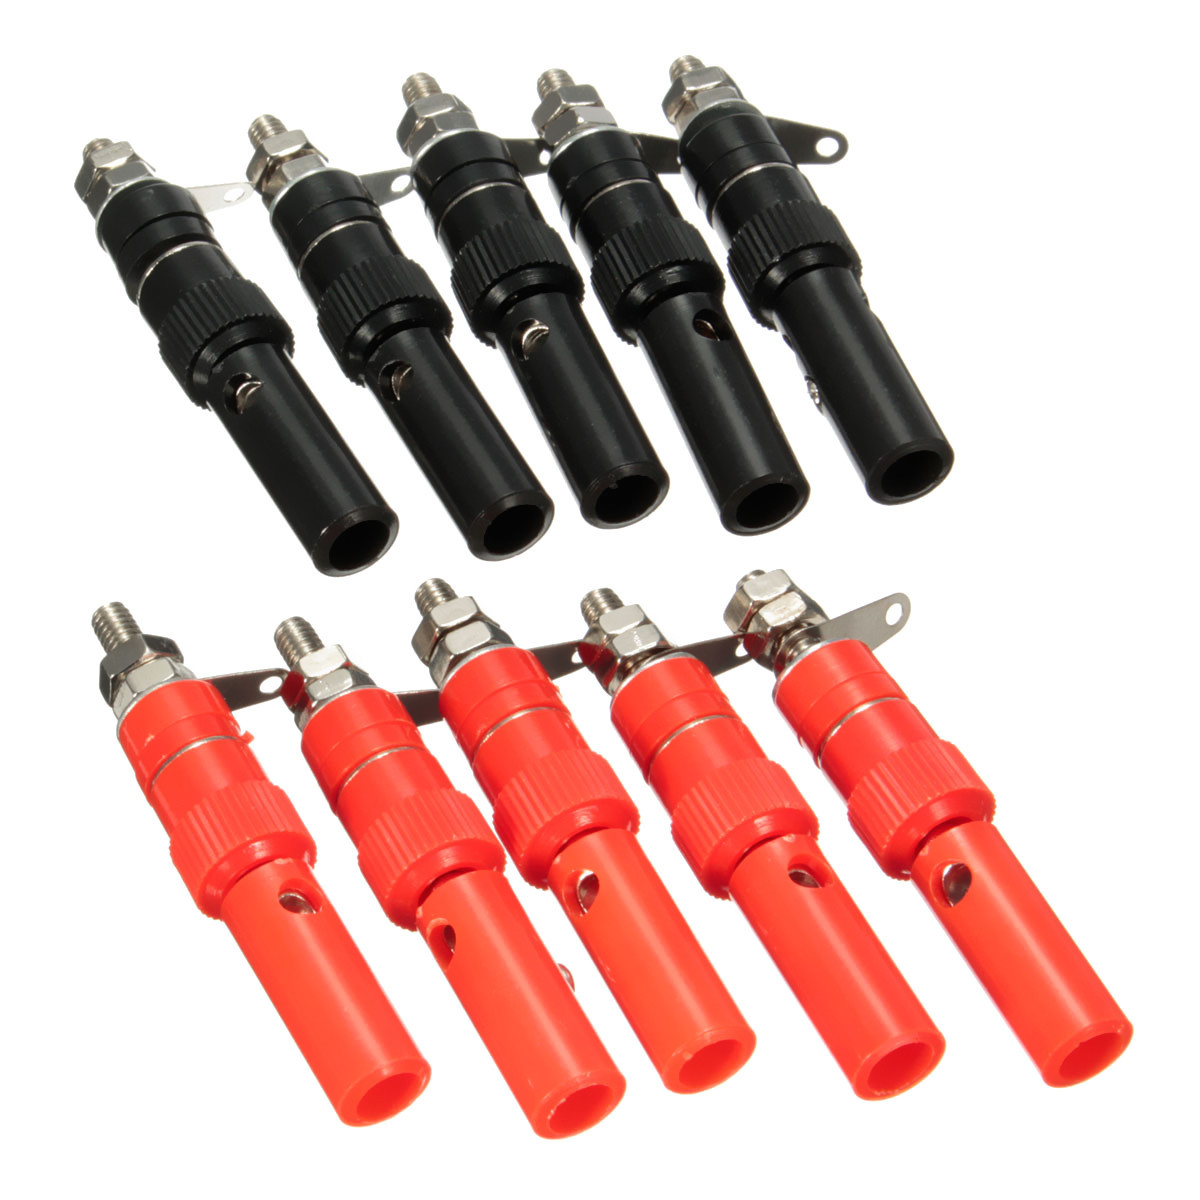 DANIU-30-Pairs-4mm-Terminal-Banana-Plug-Socket-Jack-Connectors-Instrument-Light-Tools-Black-and-Red-1358117-2